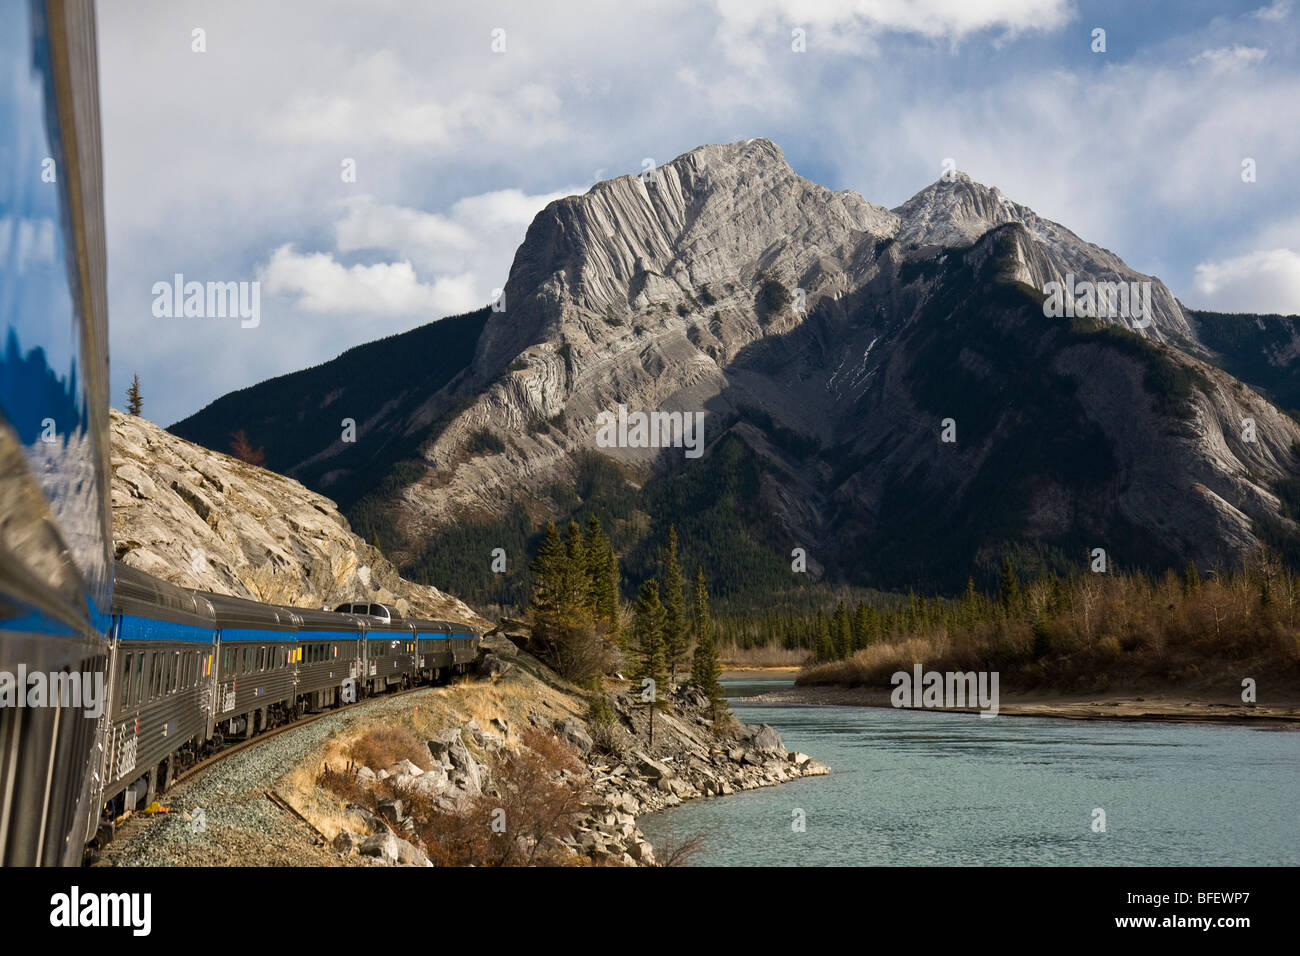 Passenger train riding along the Athabasca River in Jasper National Park, Alberta, Canada Stock Photo